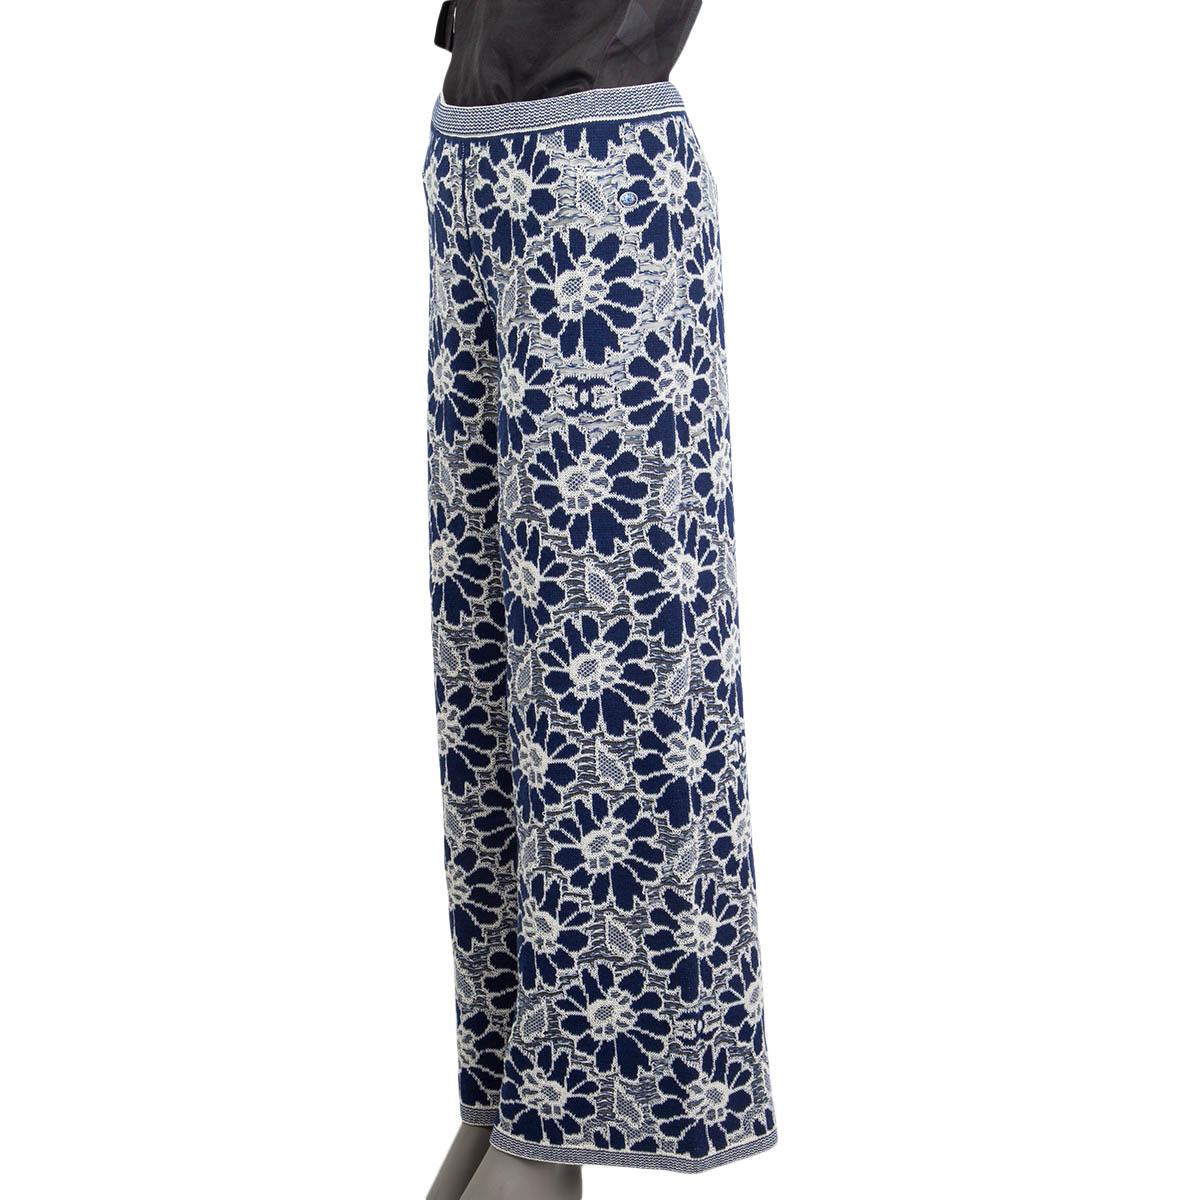 Grace Elements Womens Wide Leg Culotte Pleated Capri Sateen Pants Blue $60 